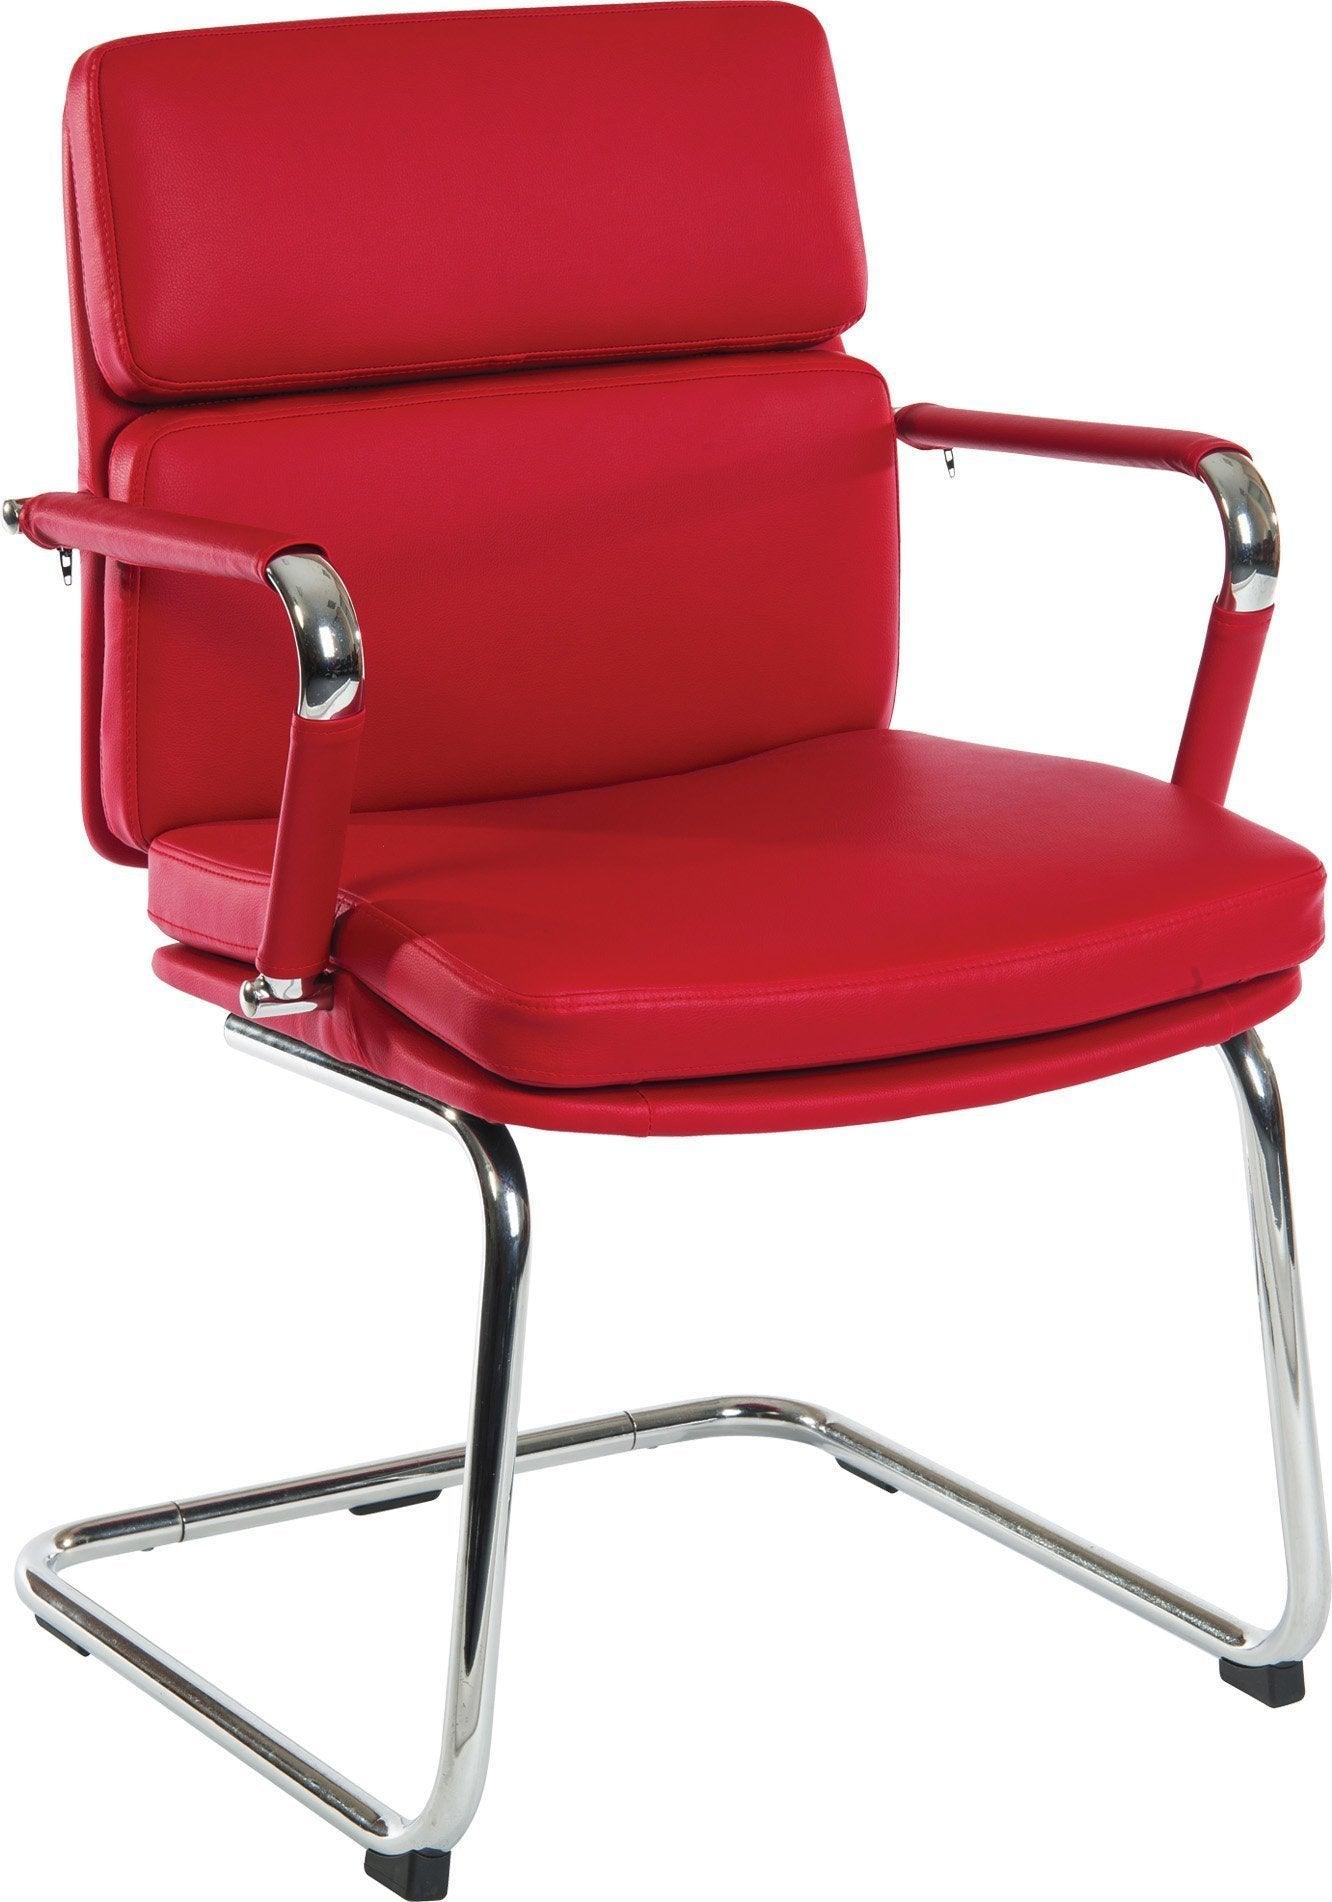 Deco visitor reception chair (red) - crimblefest furniture - image 1